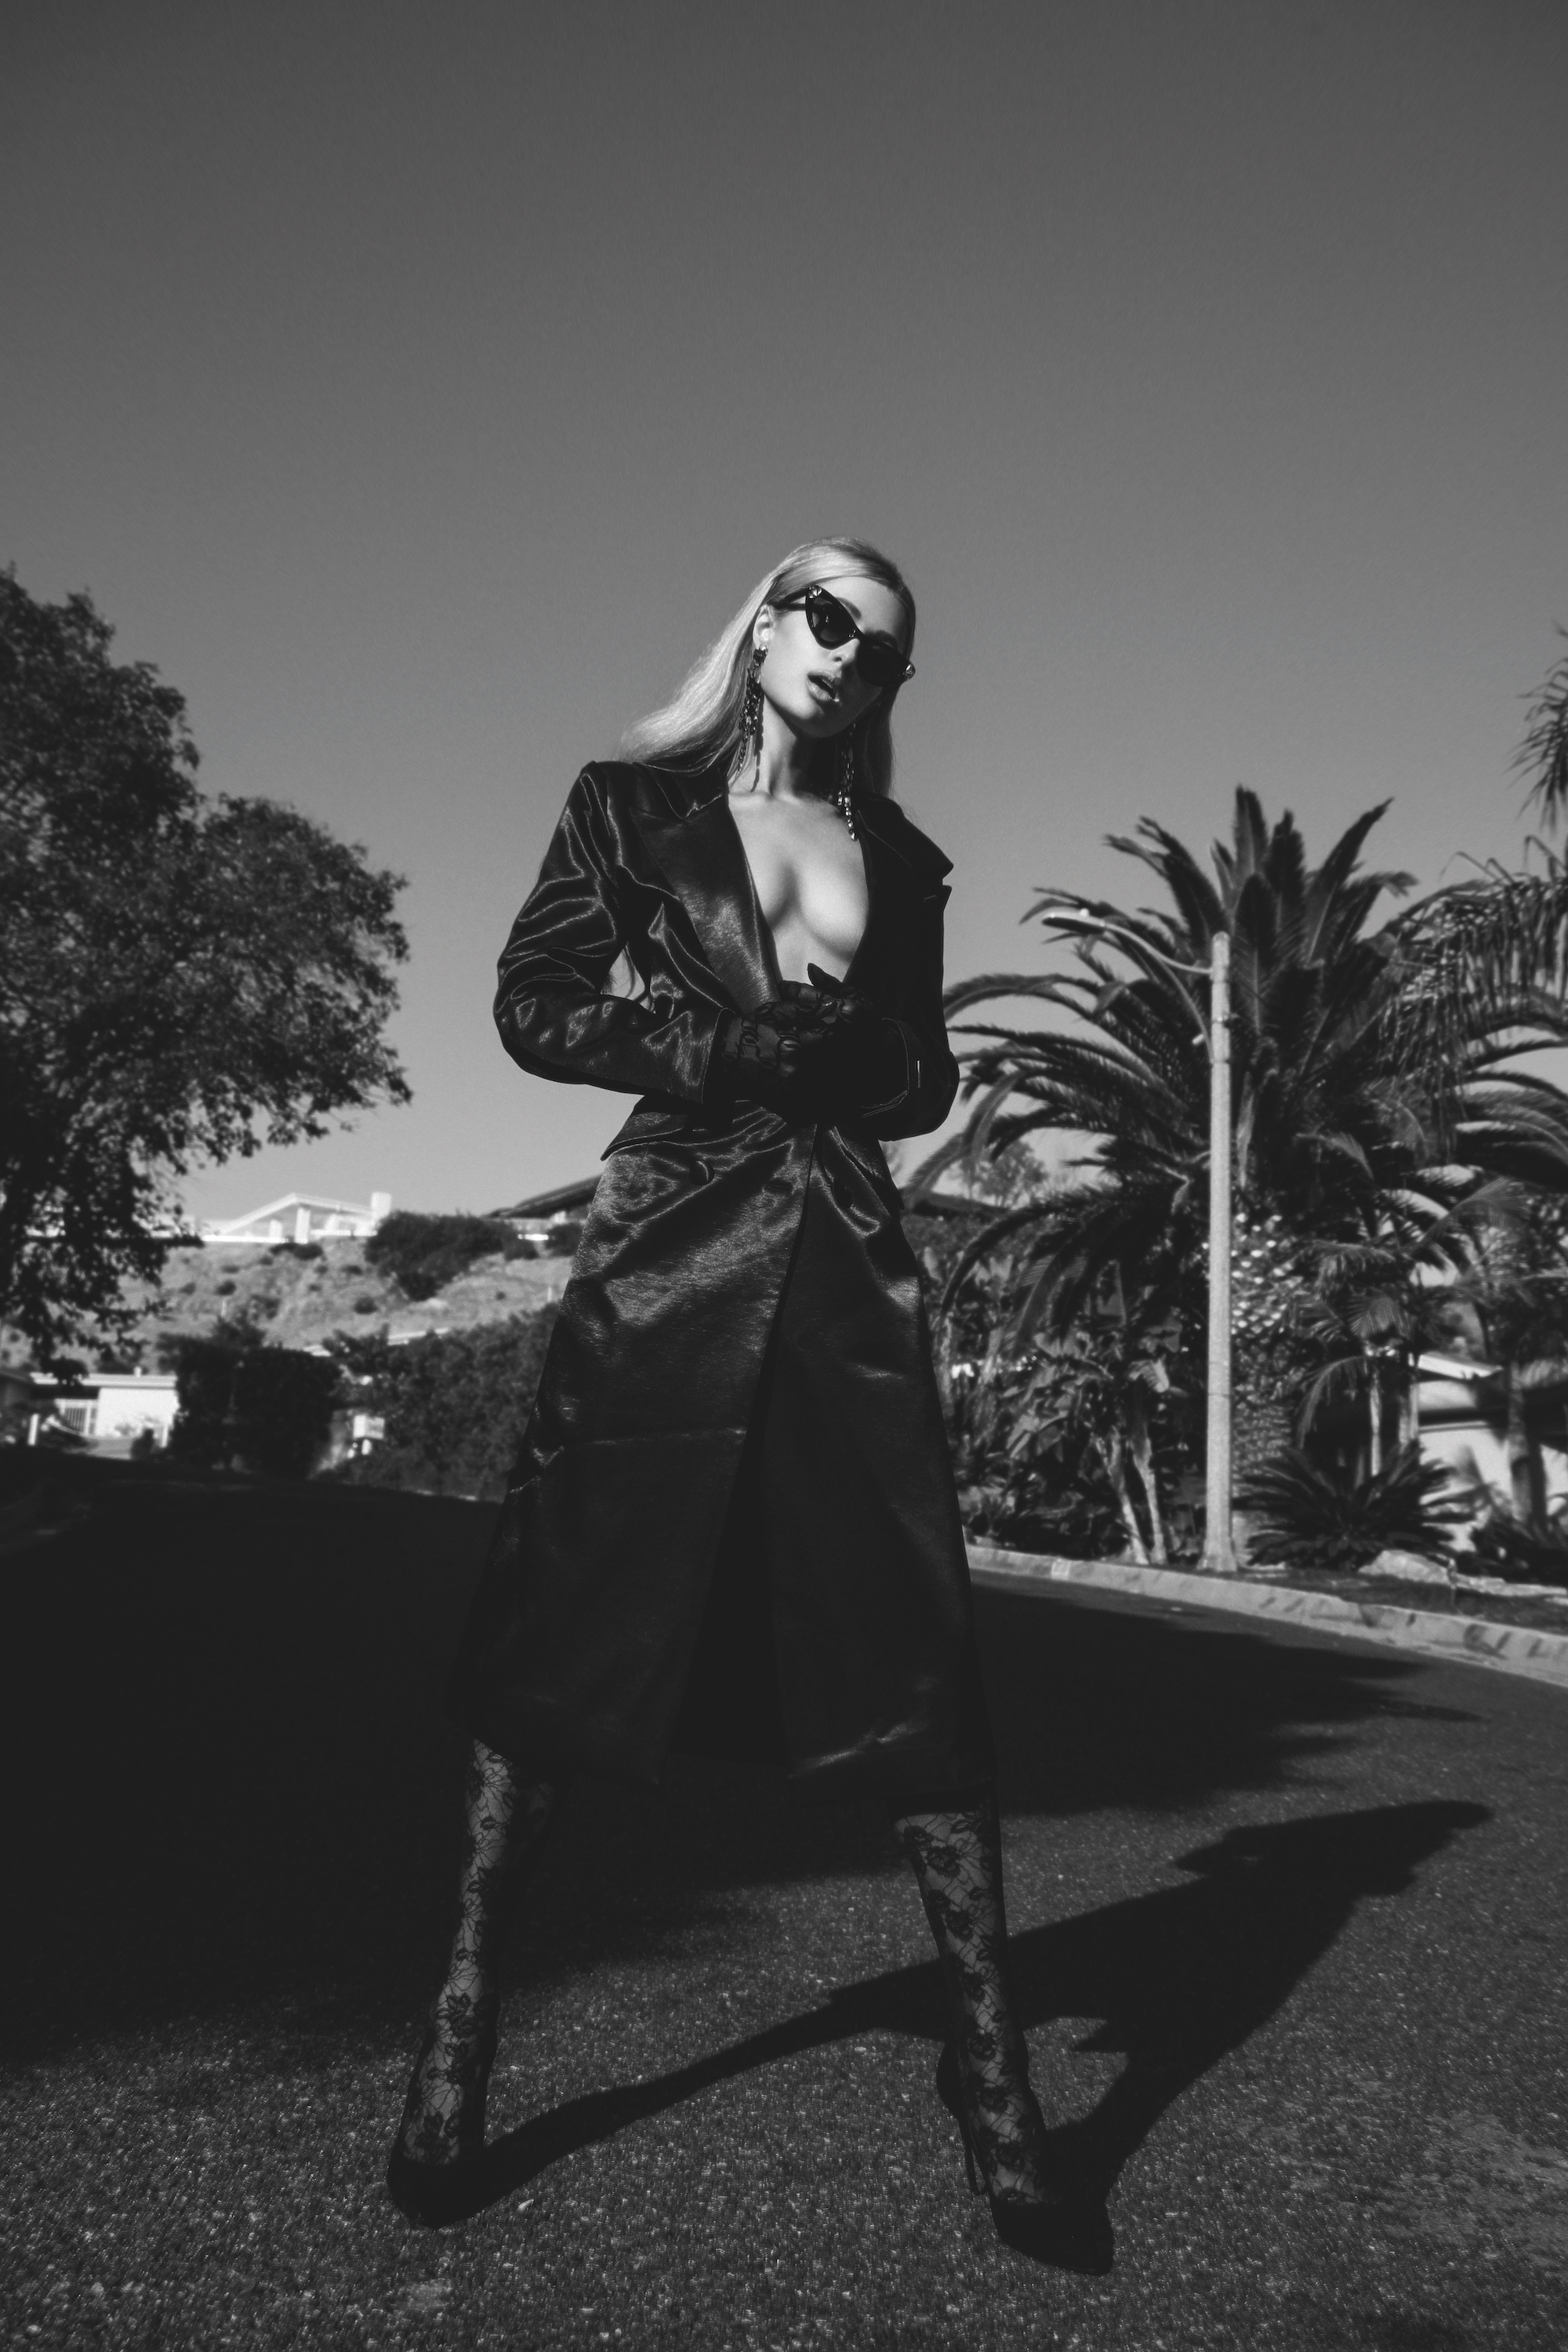 Fotos n°5 : Paris Hilton Reozing Sex Appeal en New Shoot!